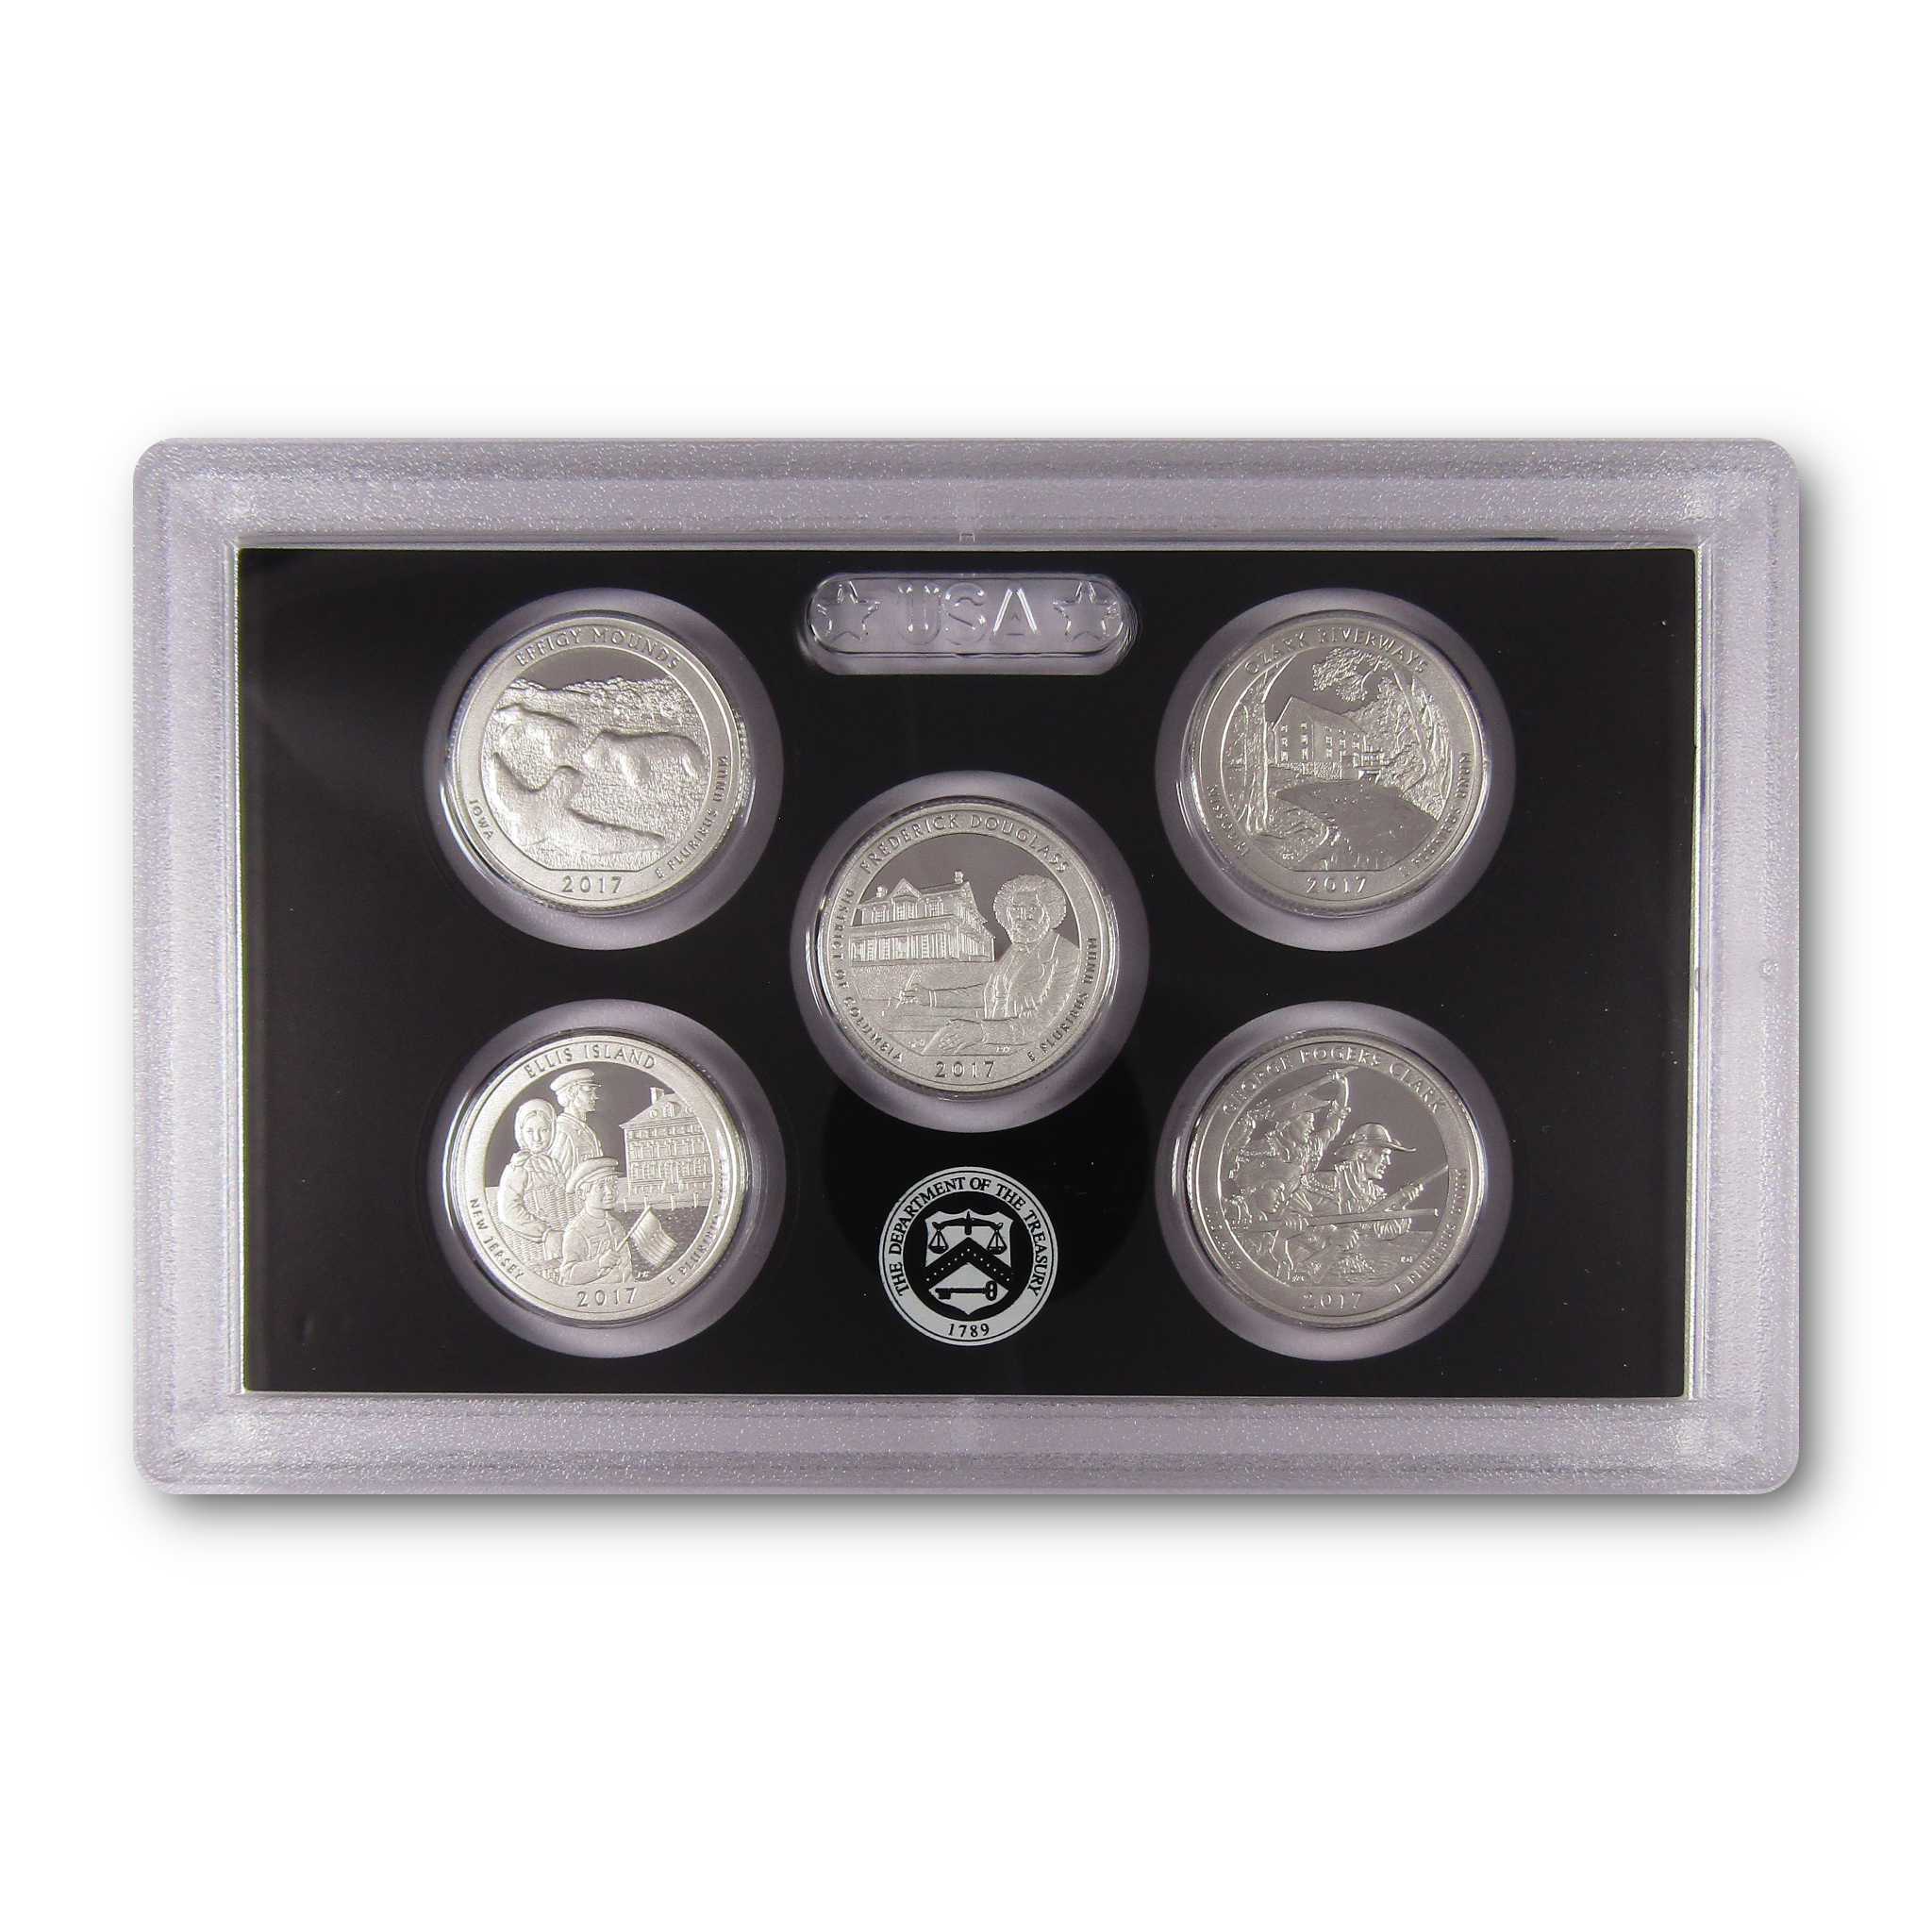 2017 America the Beautiful Quarter Silver Proof Set U.S. Mint OGP COA